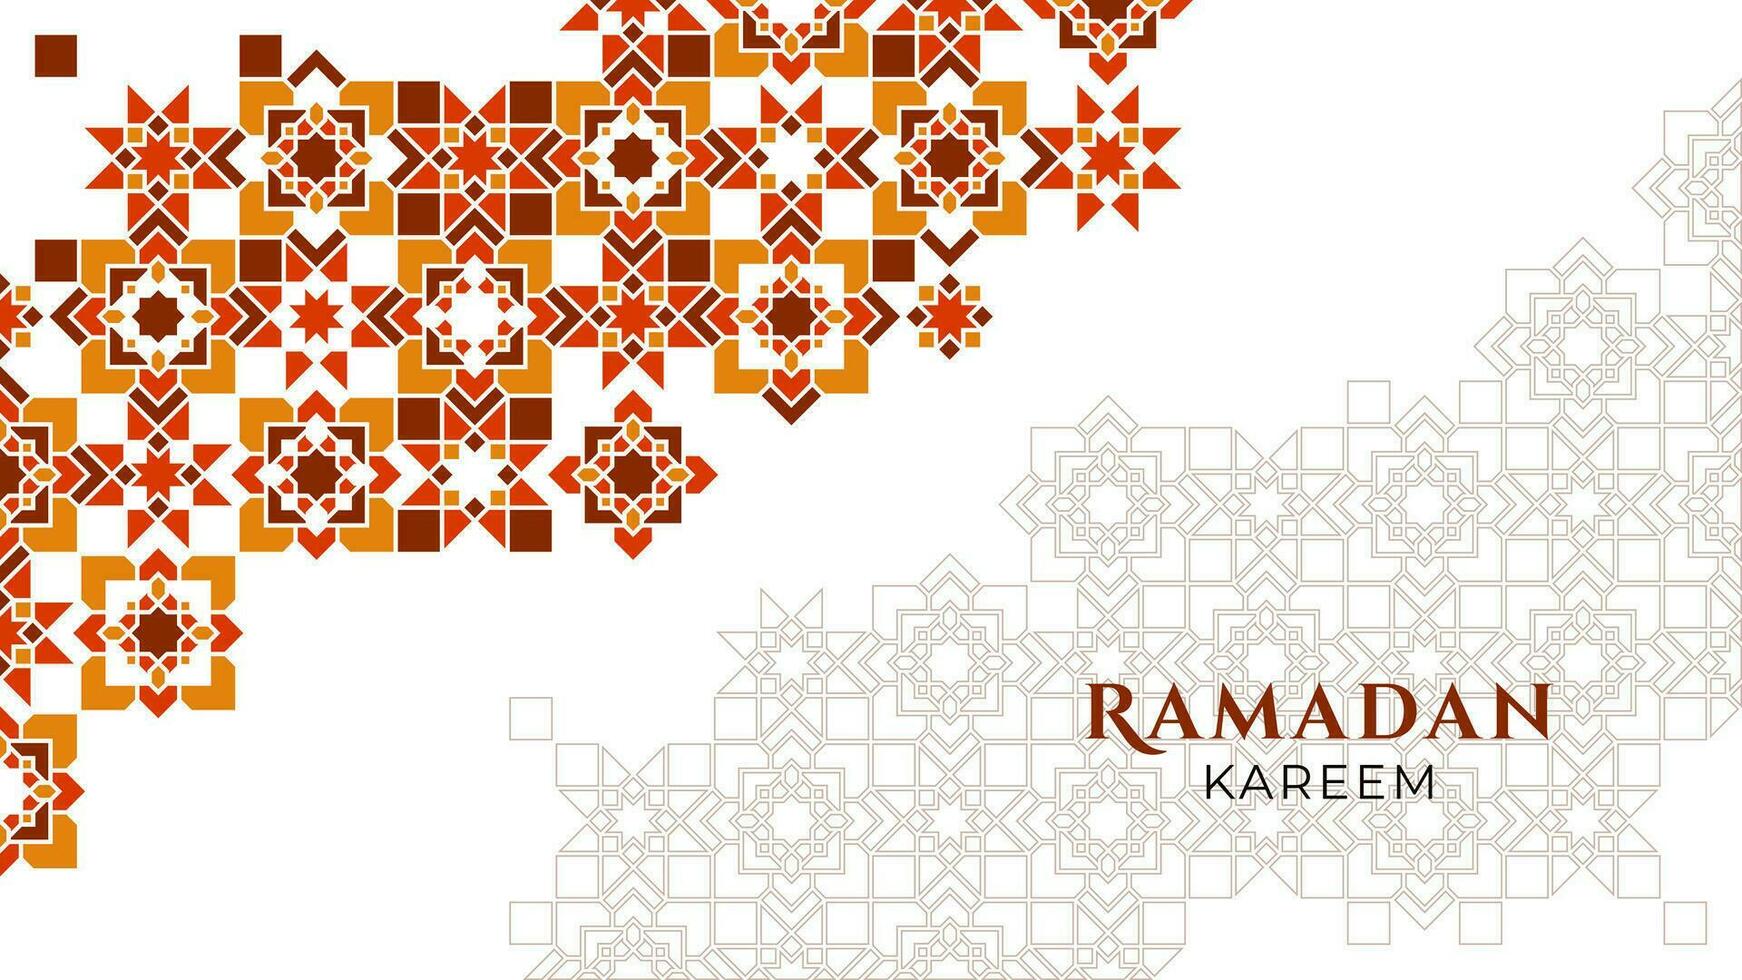 Mandala Art Ornament for Islamic or Culture Theme, Specially for Ramadan Greeting Design vector